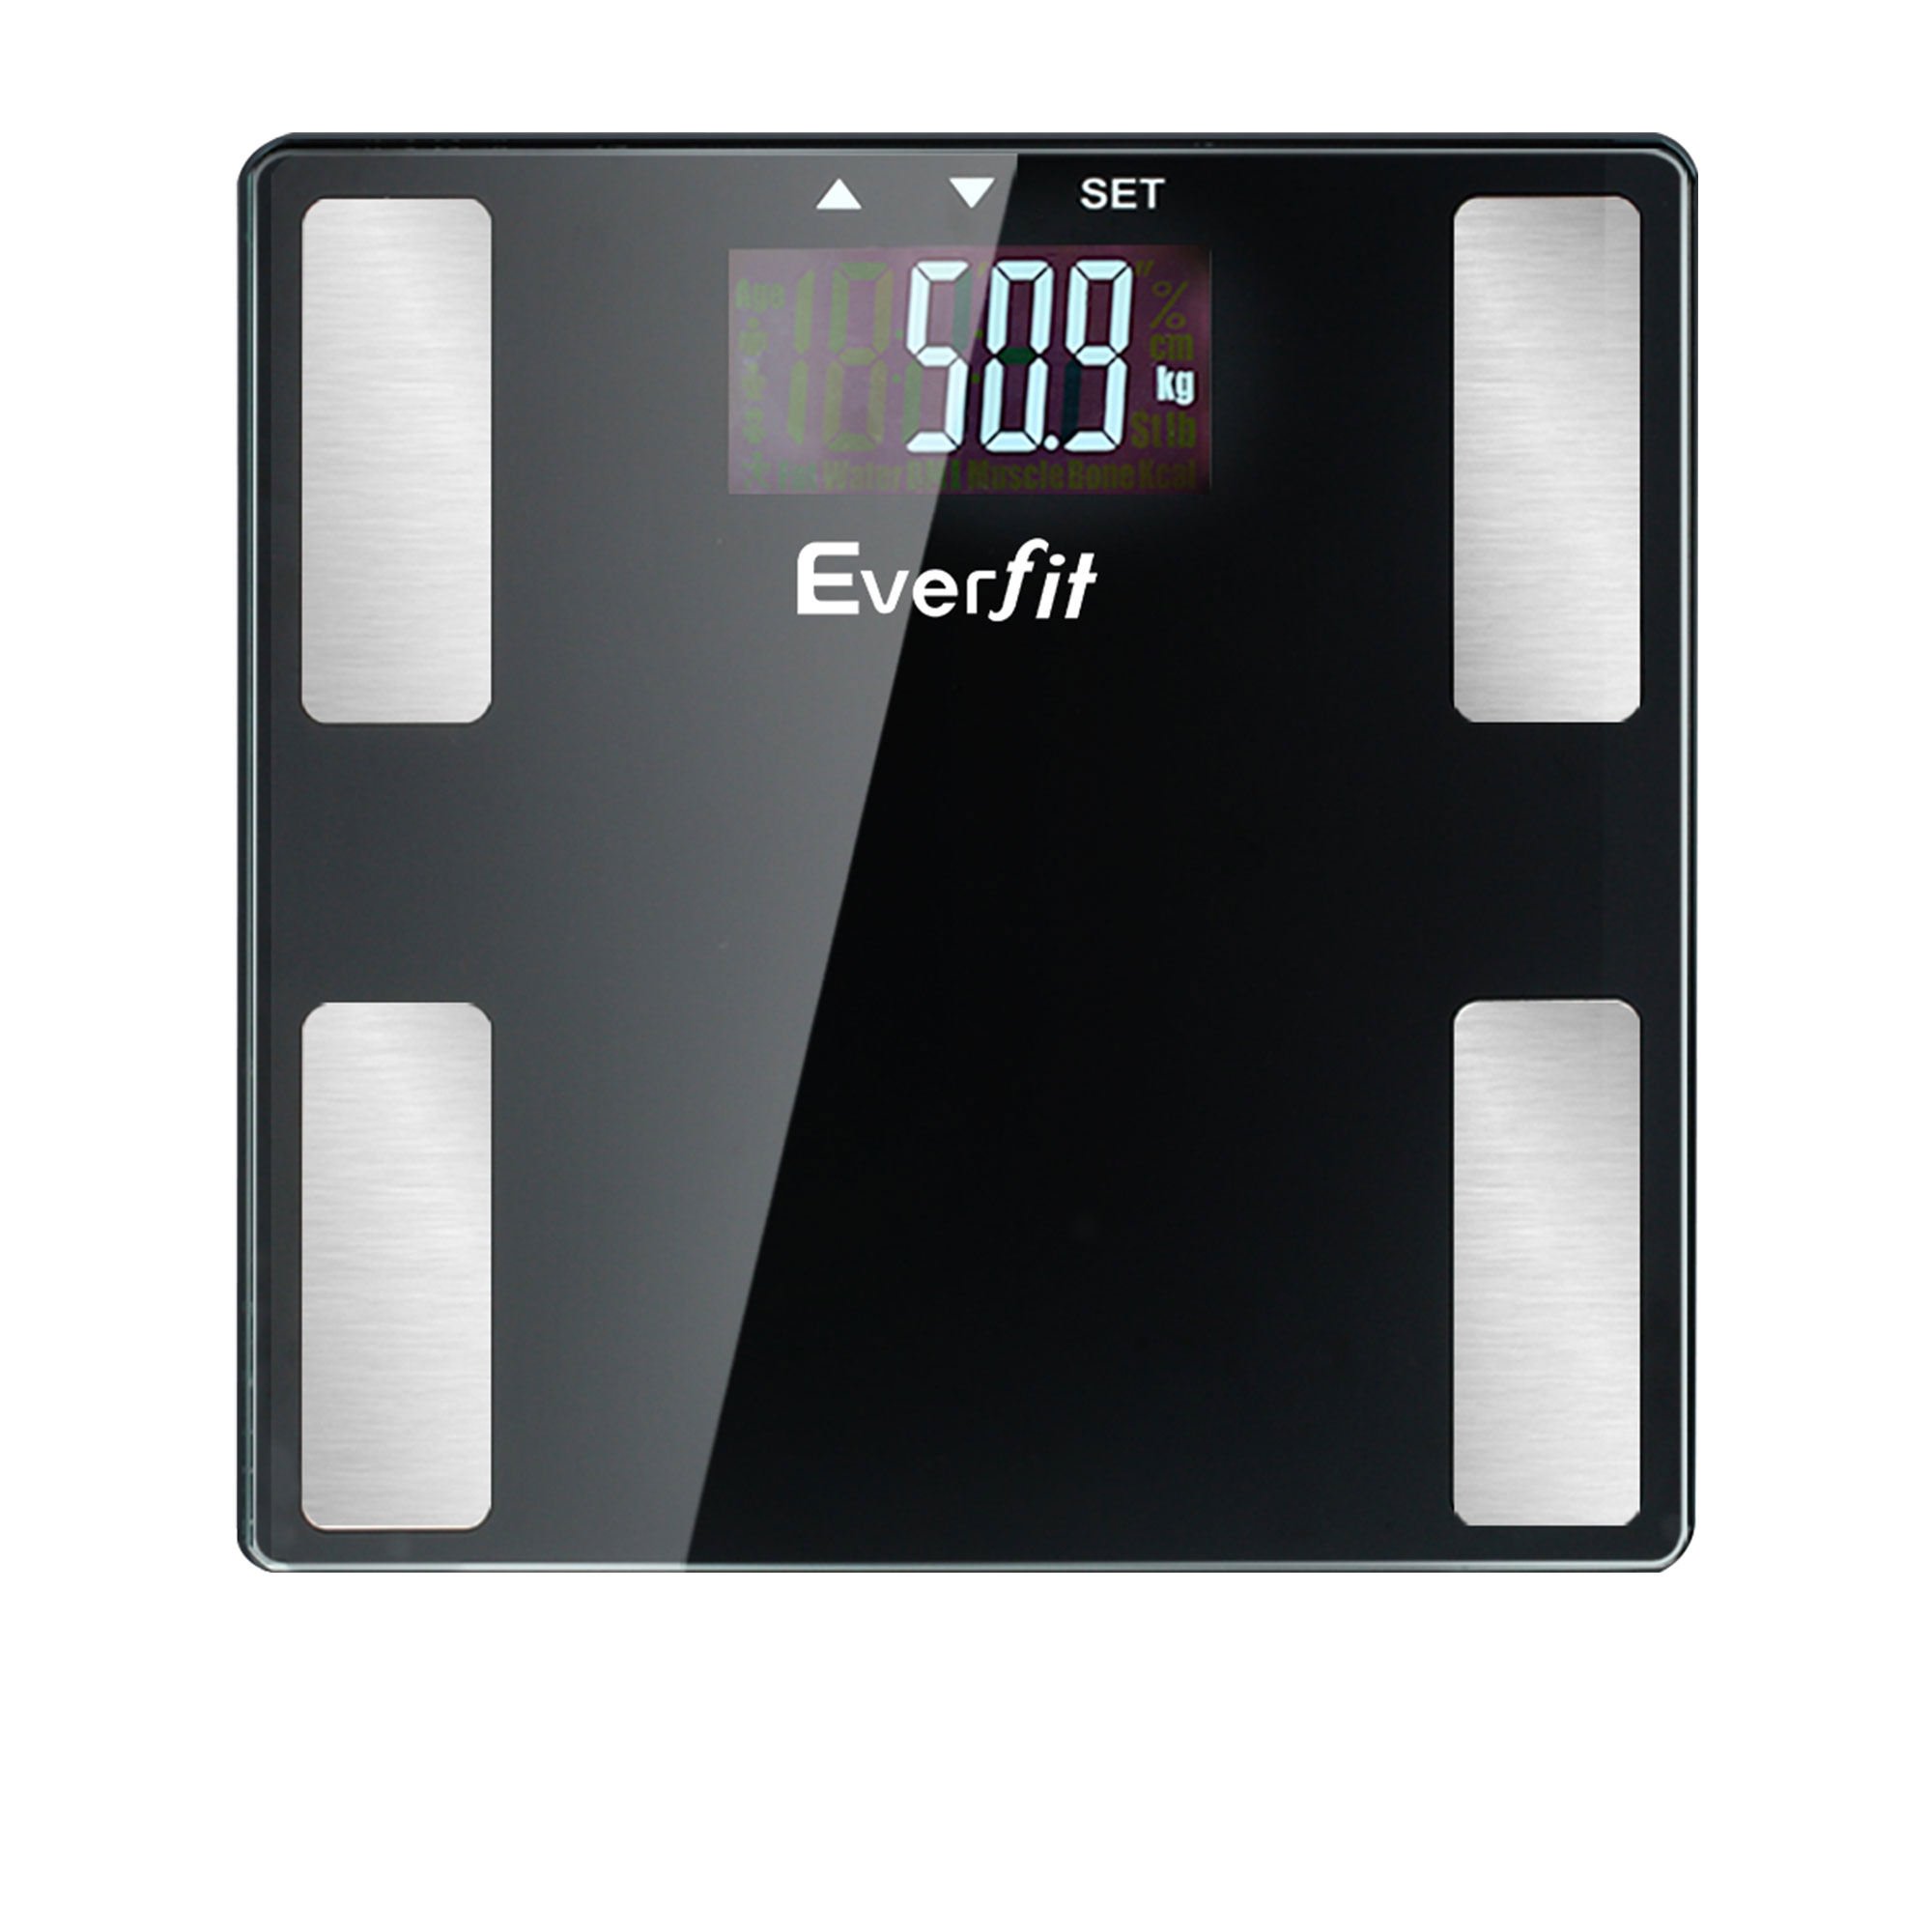 Everfit Body Fat Bathroom Scale Image 1